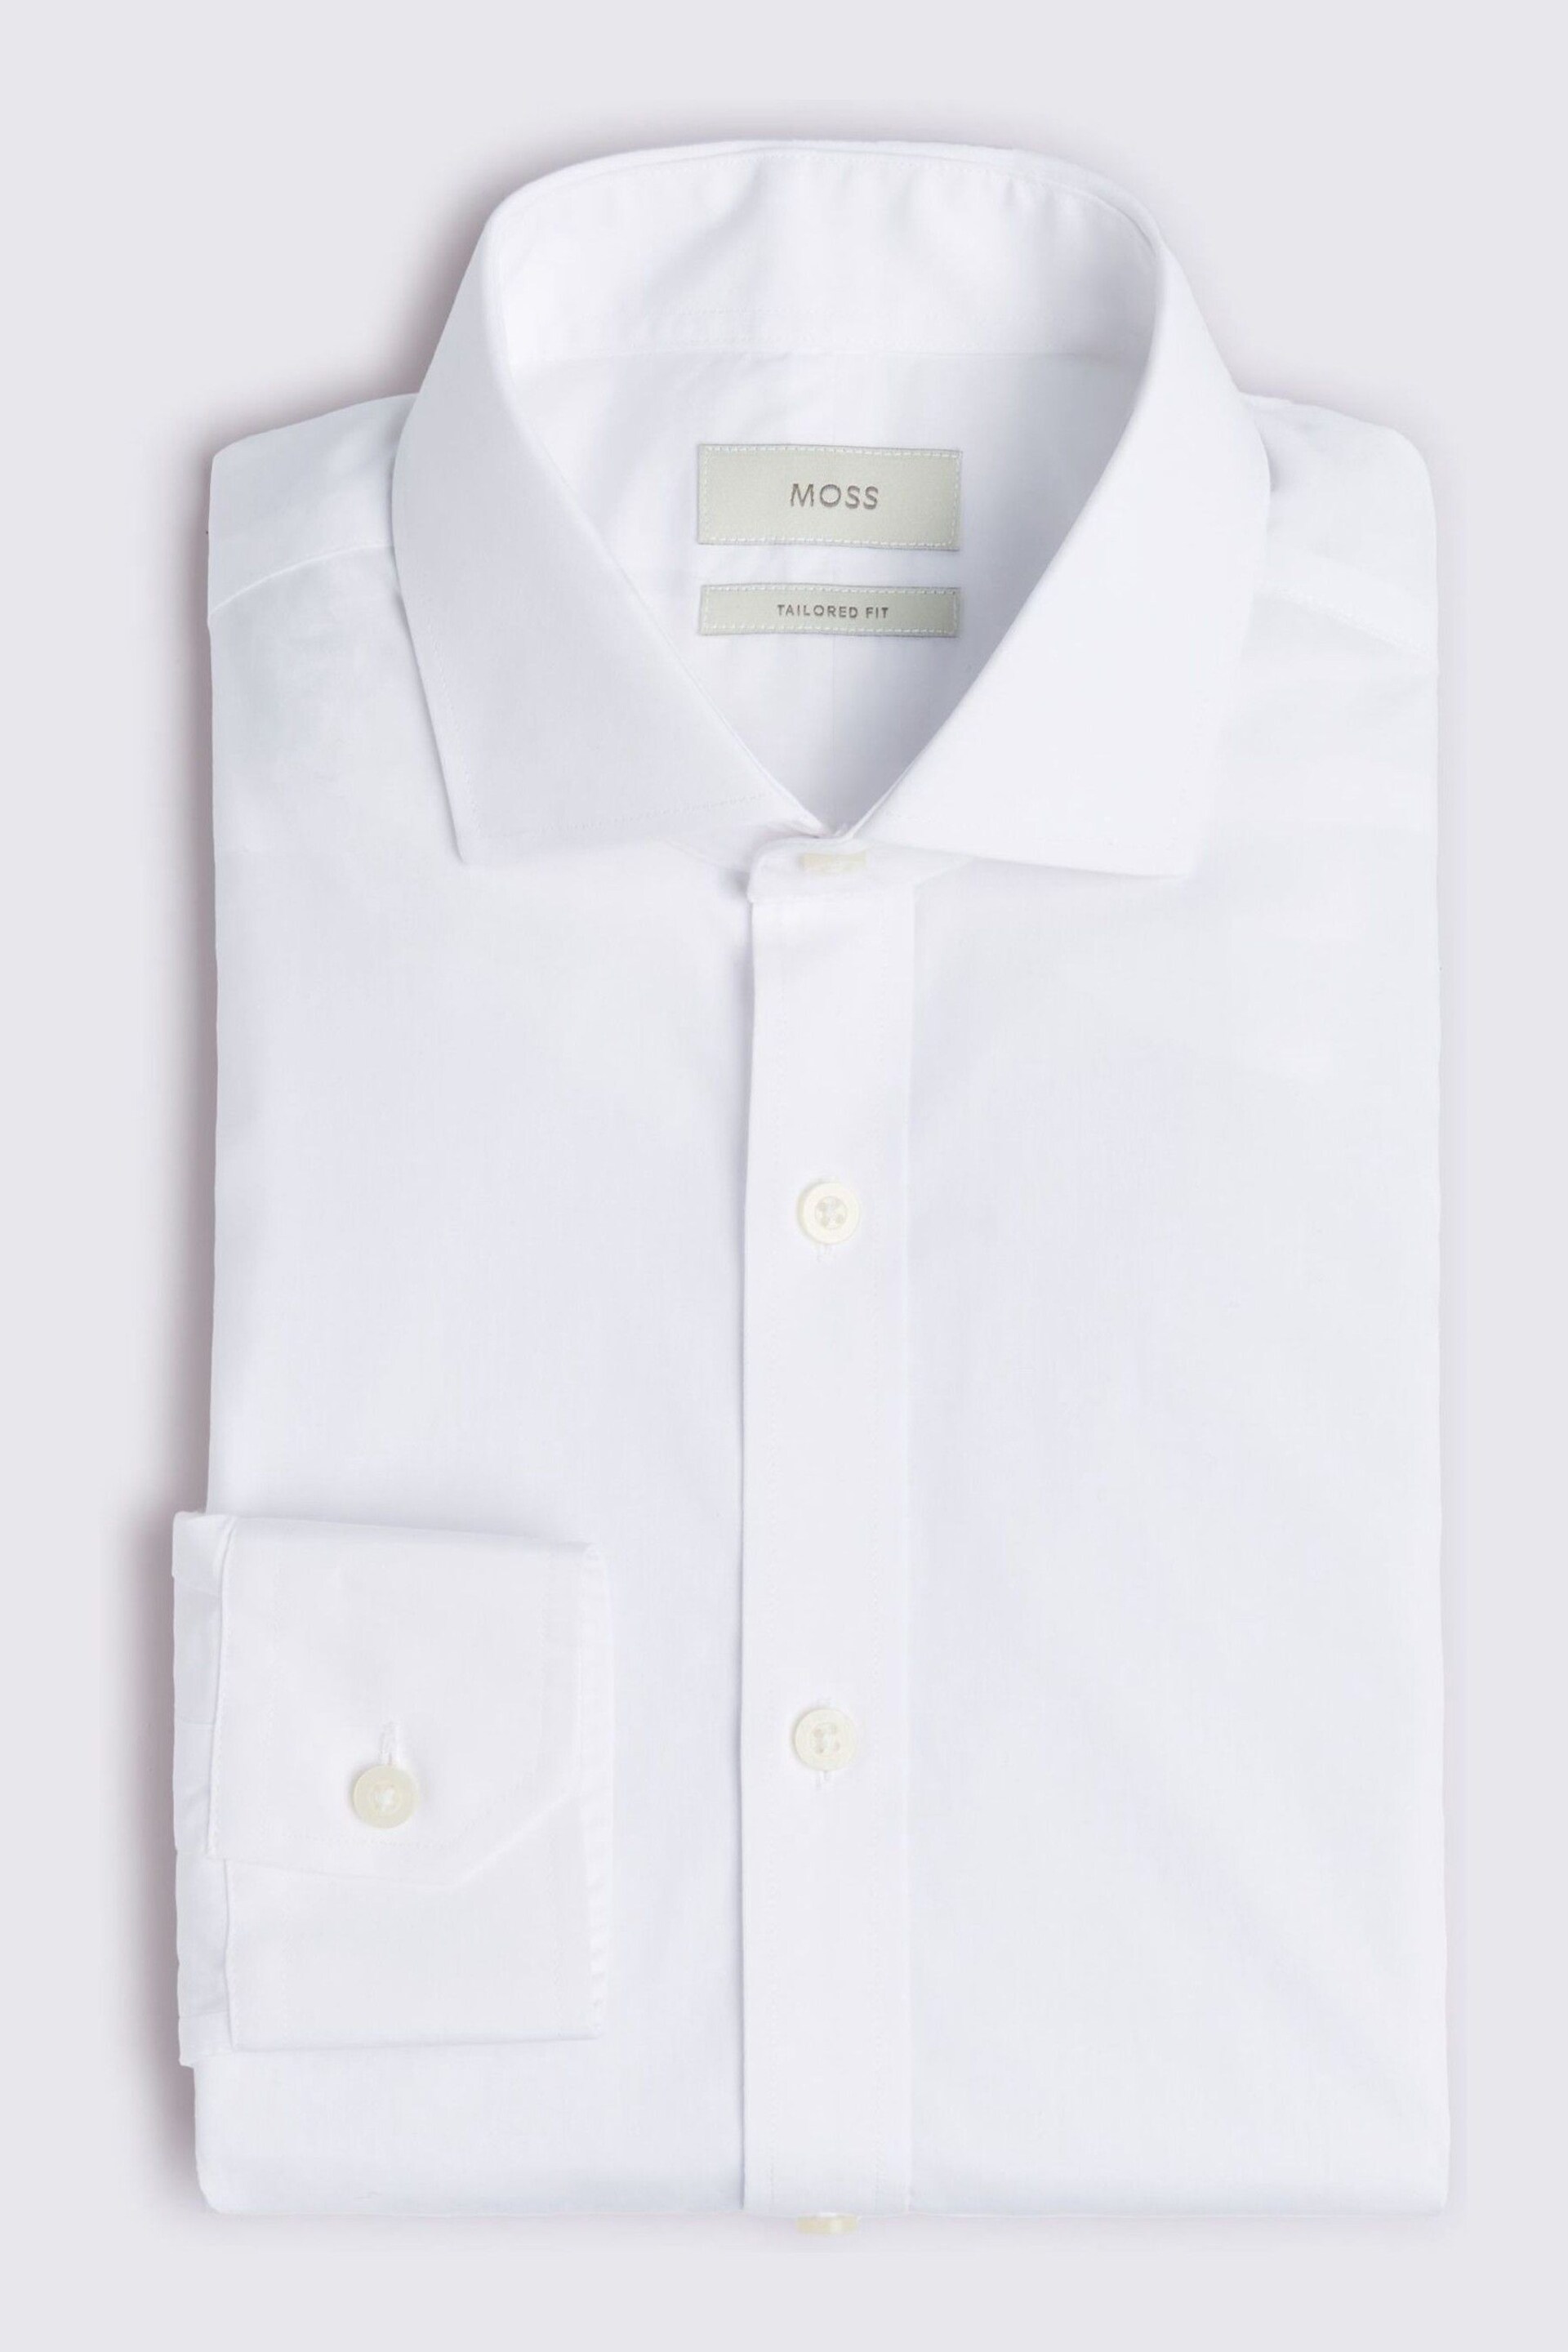 MOSS White Tailored Fit Twill Zero Iron Shirt - Image 4 of 4